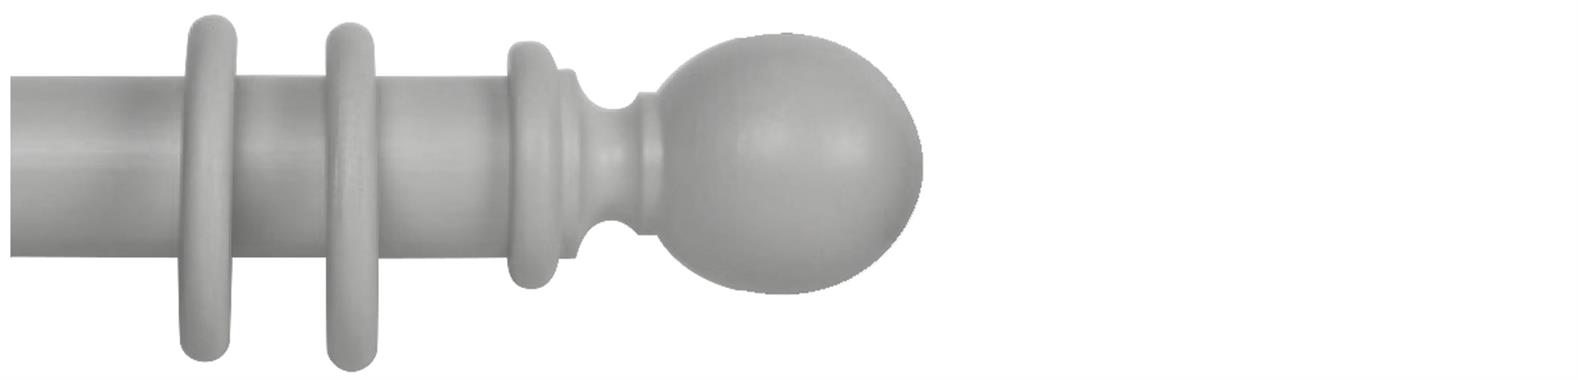 Cameron Fuller 35mm Pole Nimbus Ball